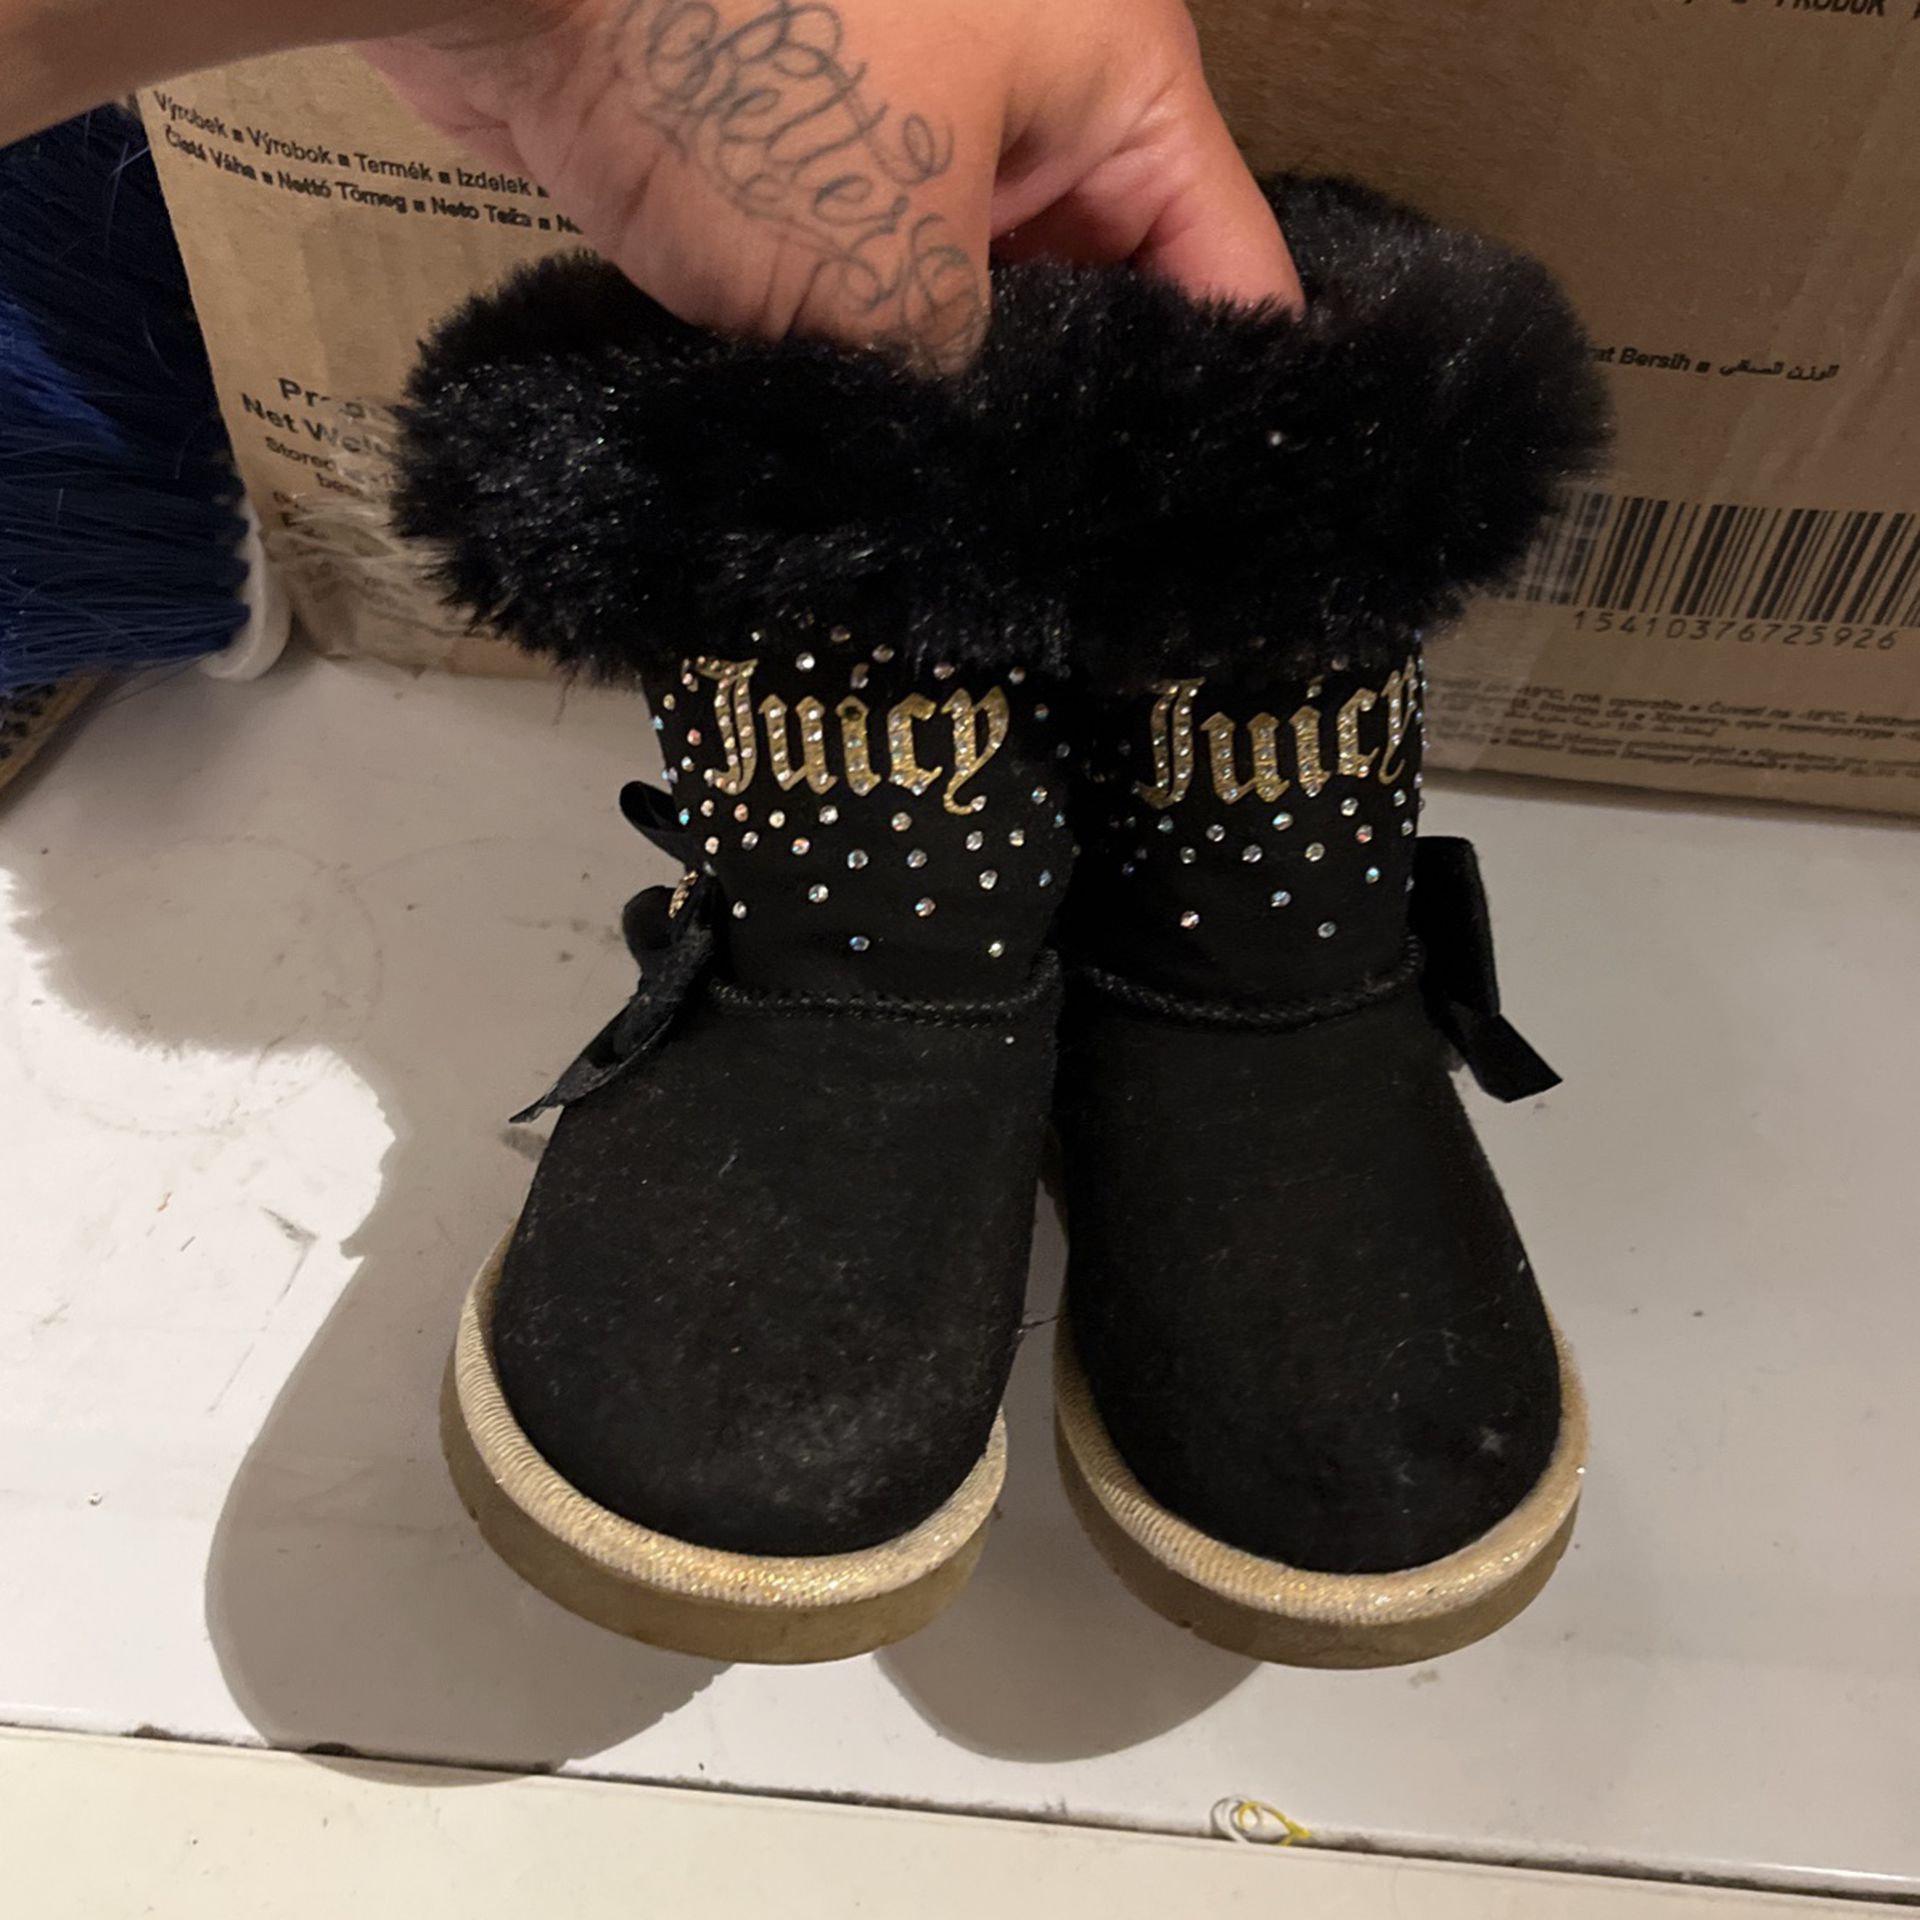 Juicy Boots 